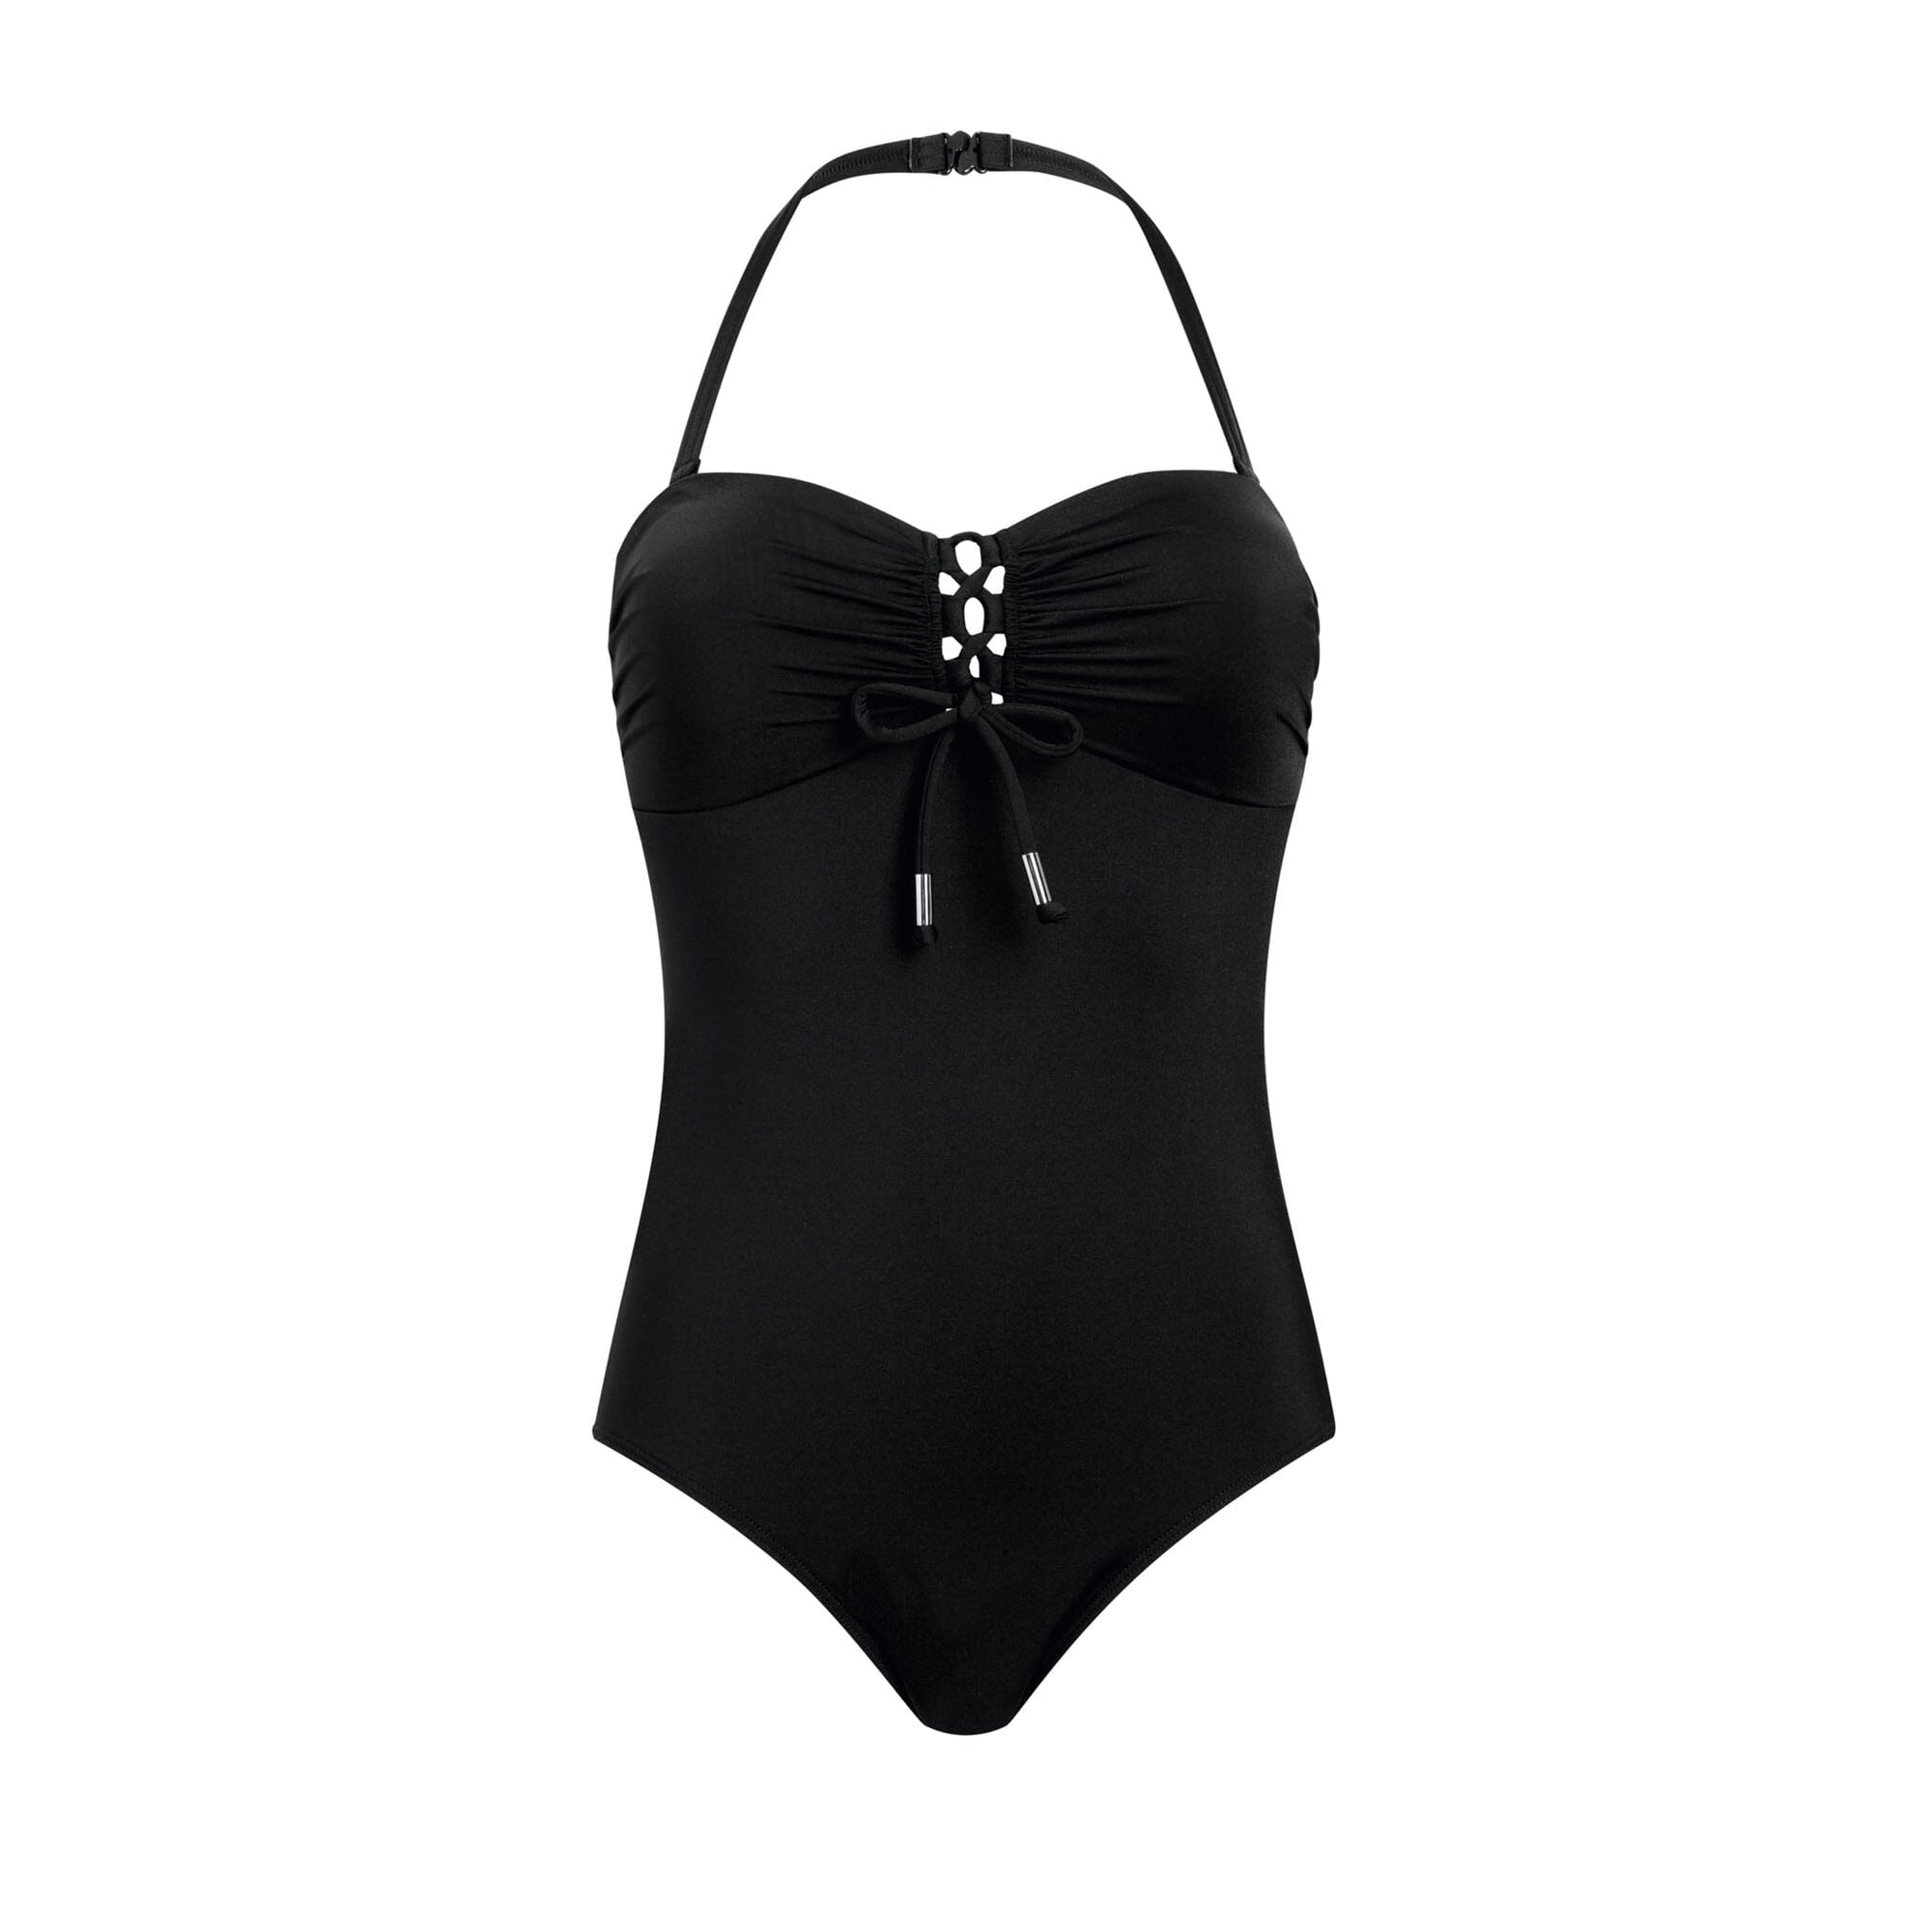 Amoena® Maldives One-Piece Wire-Free Swimsuit